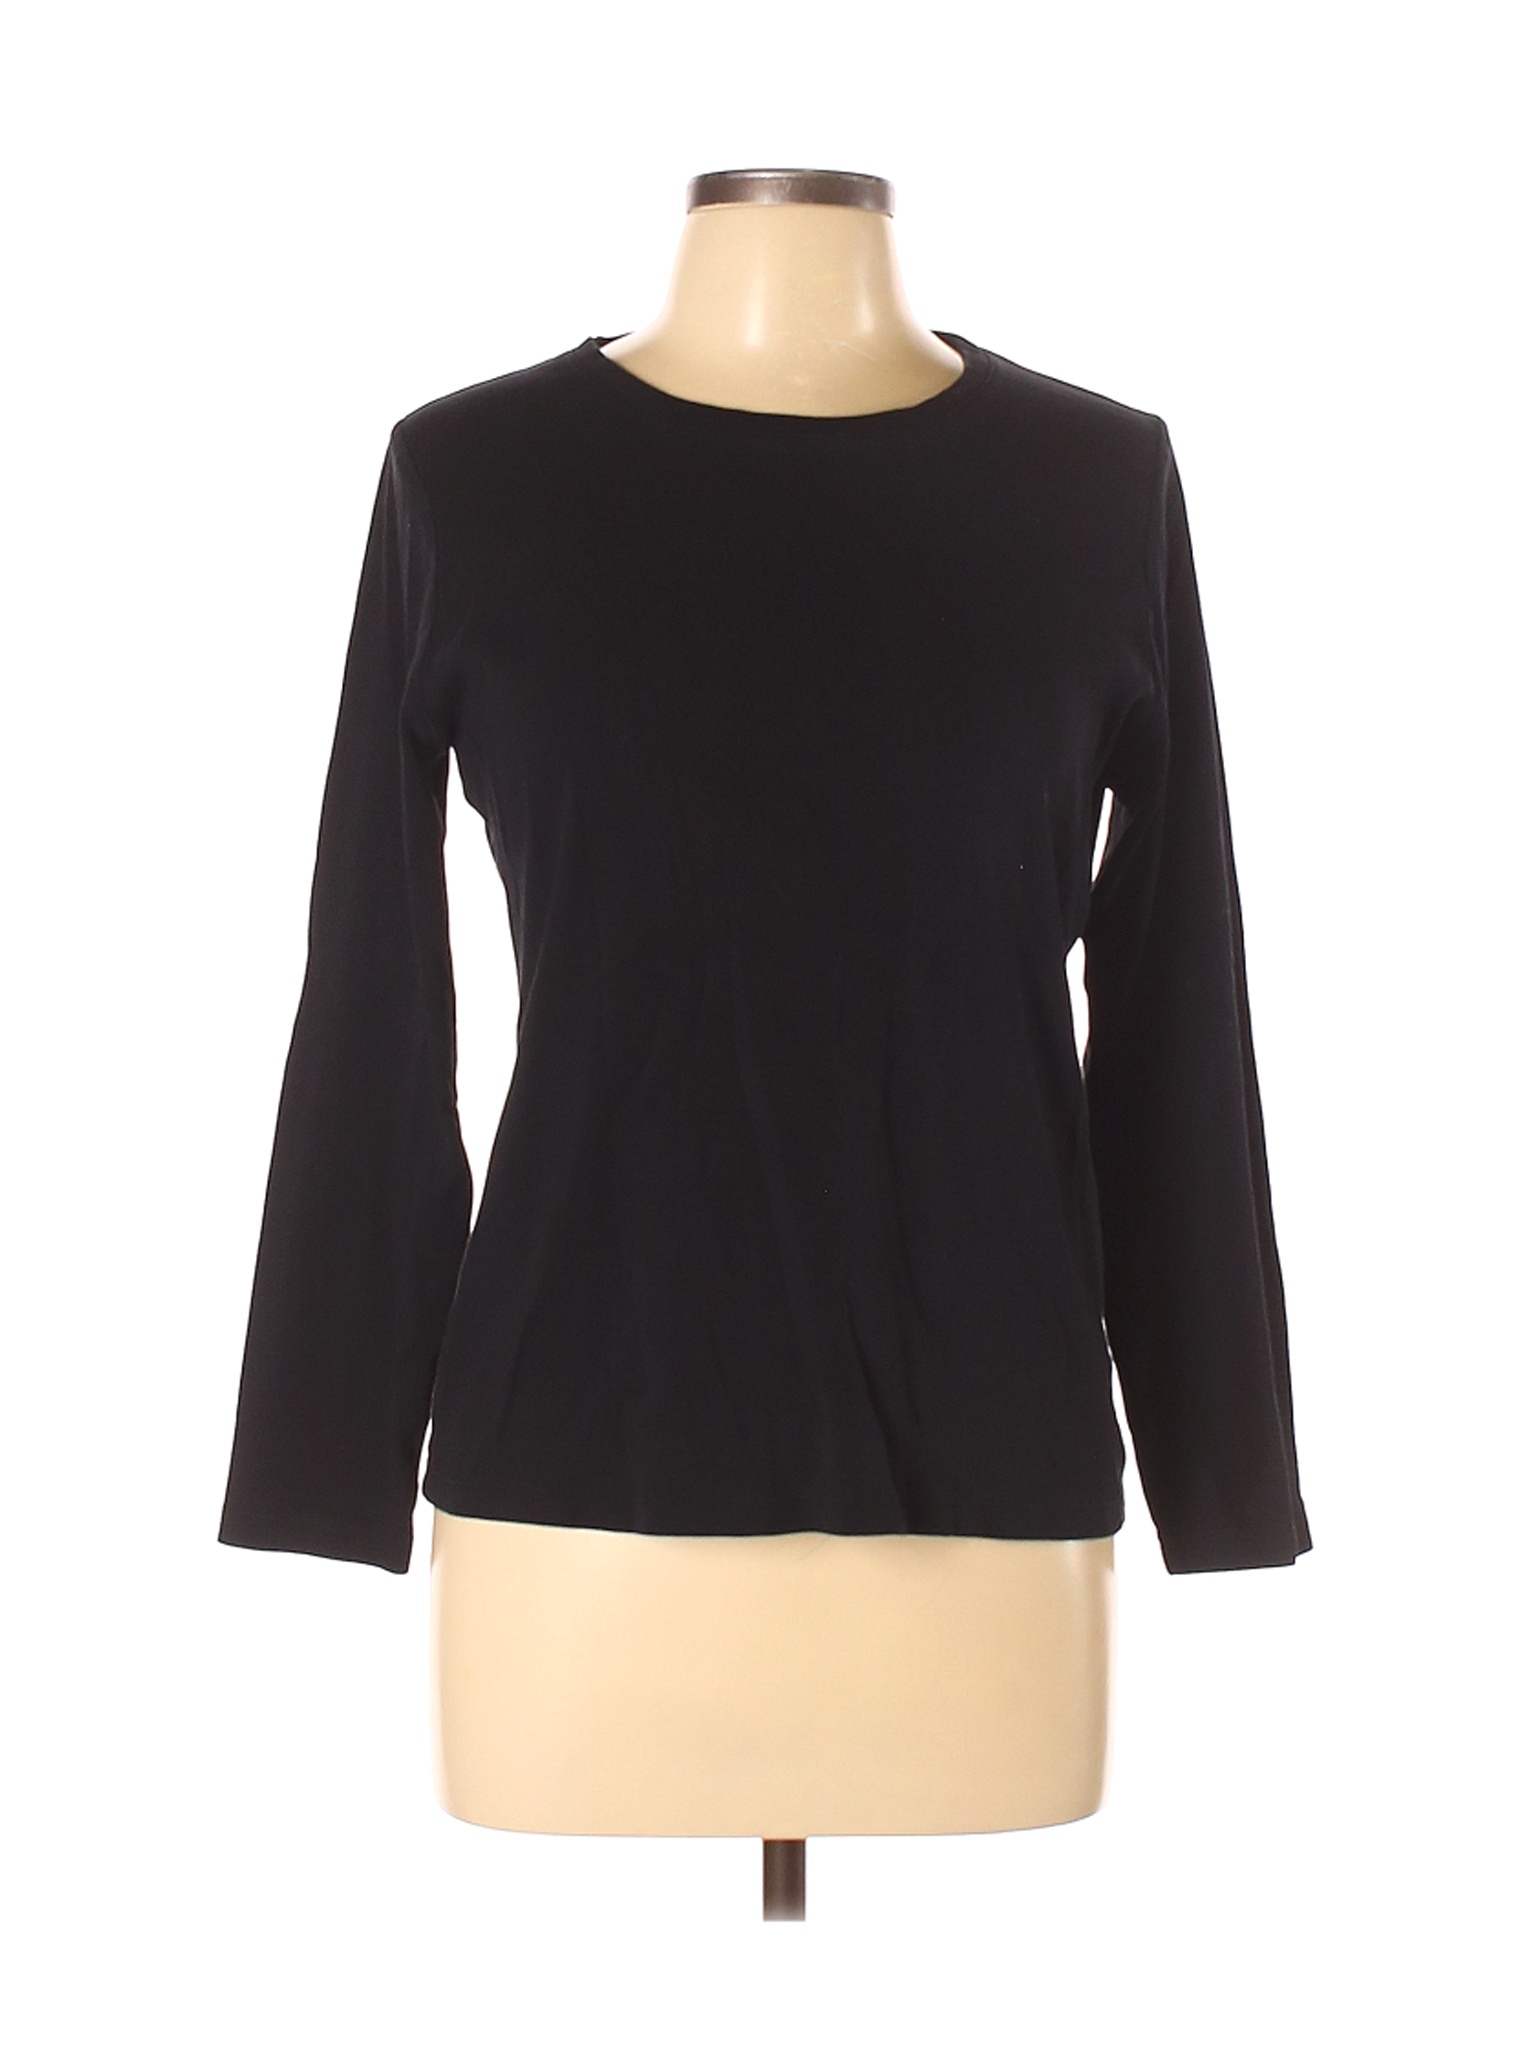 Talbots Outlet Women Black Long Sleeve T-Shirt L | eBay